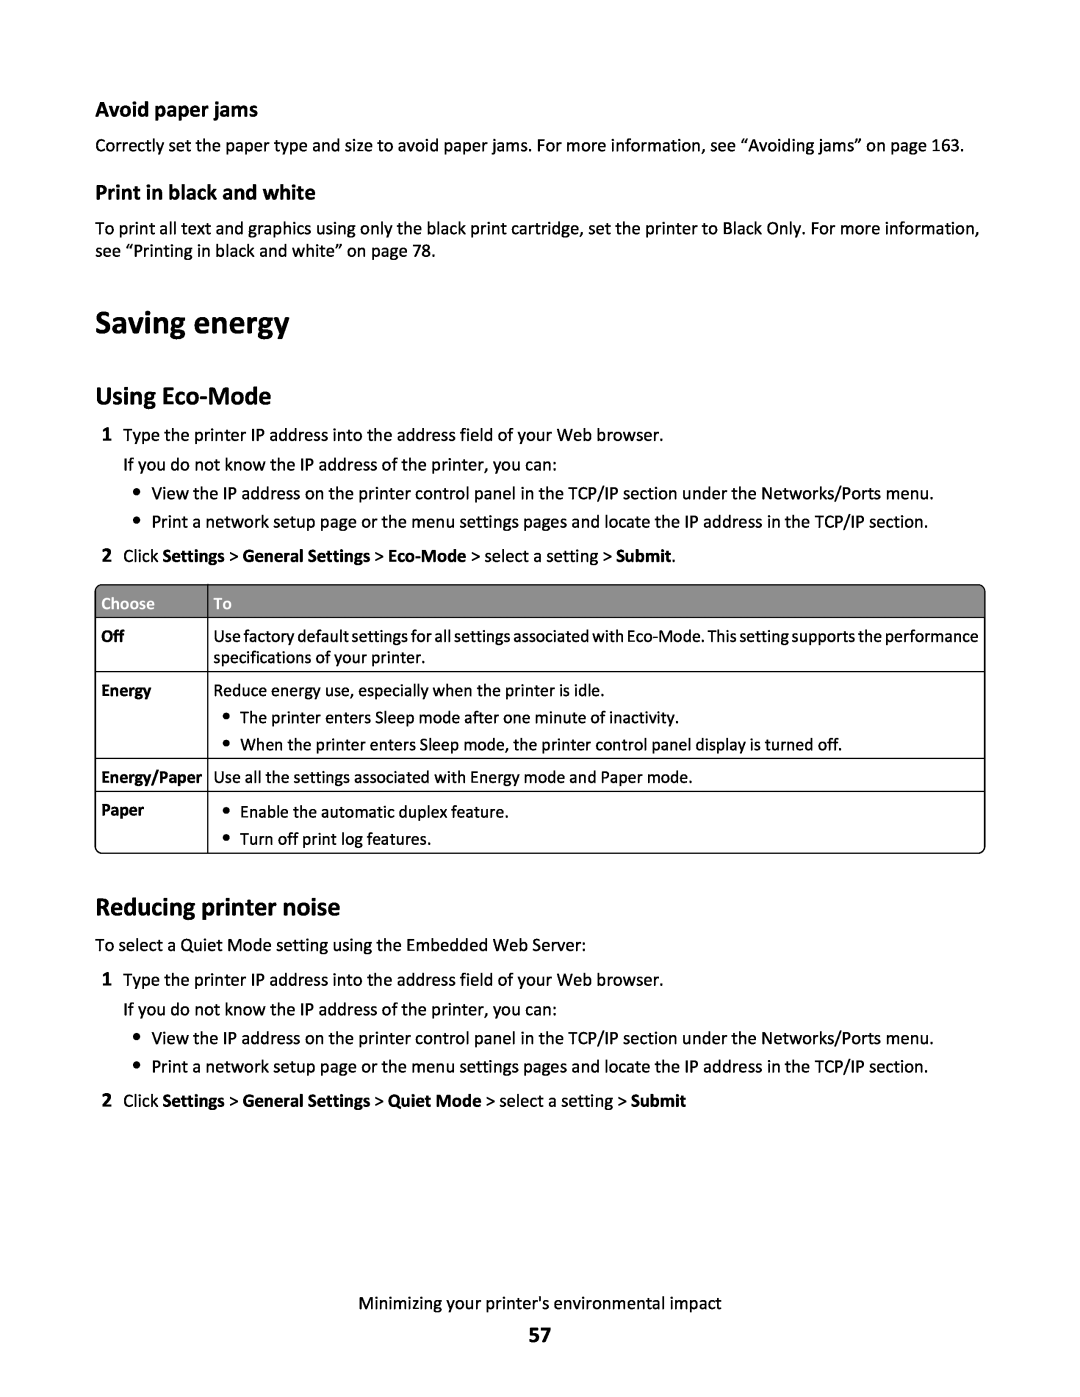 Lexmark C790 manual Saving energy, Using Eco-Mode, Reducing printer noise, Avoid paper jams, Print in black and white 